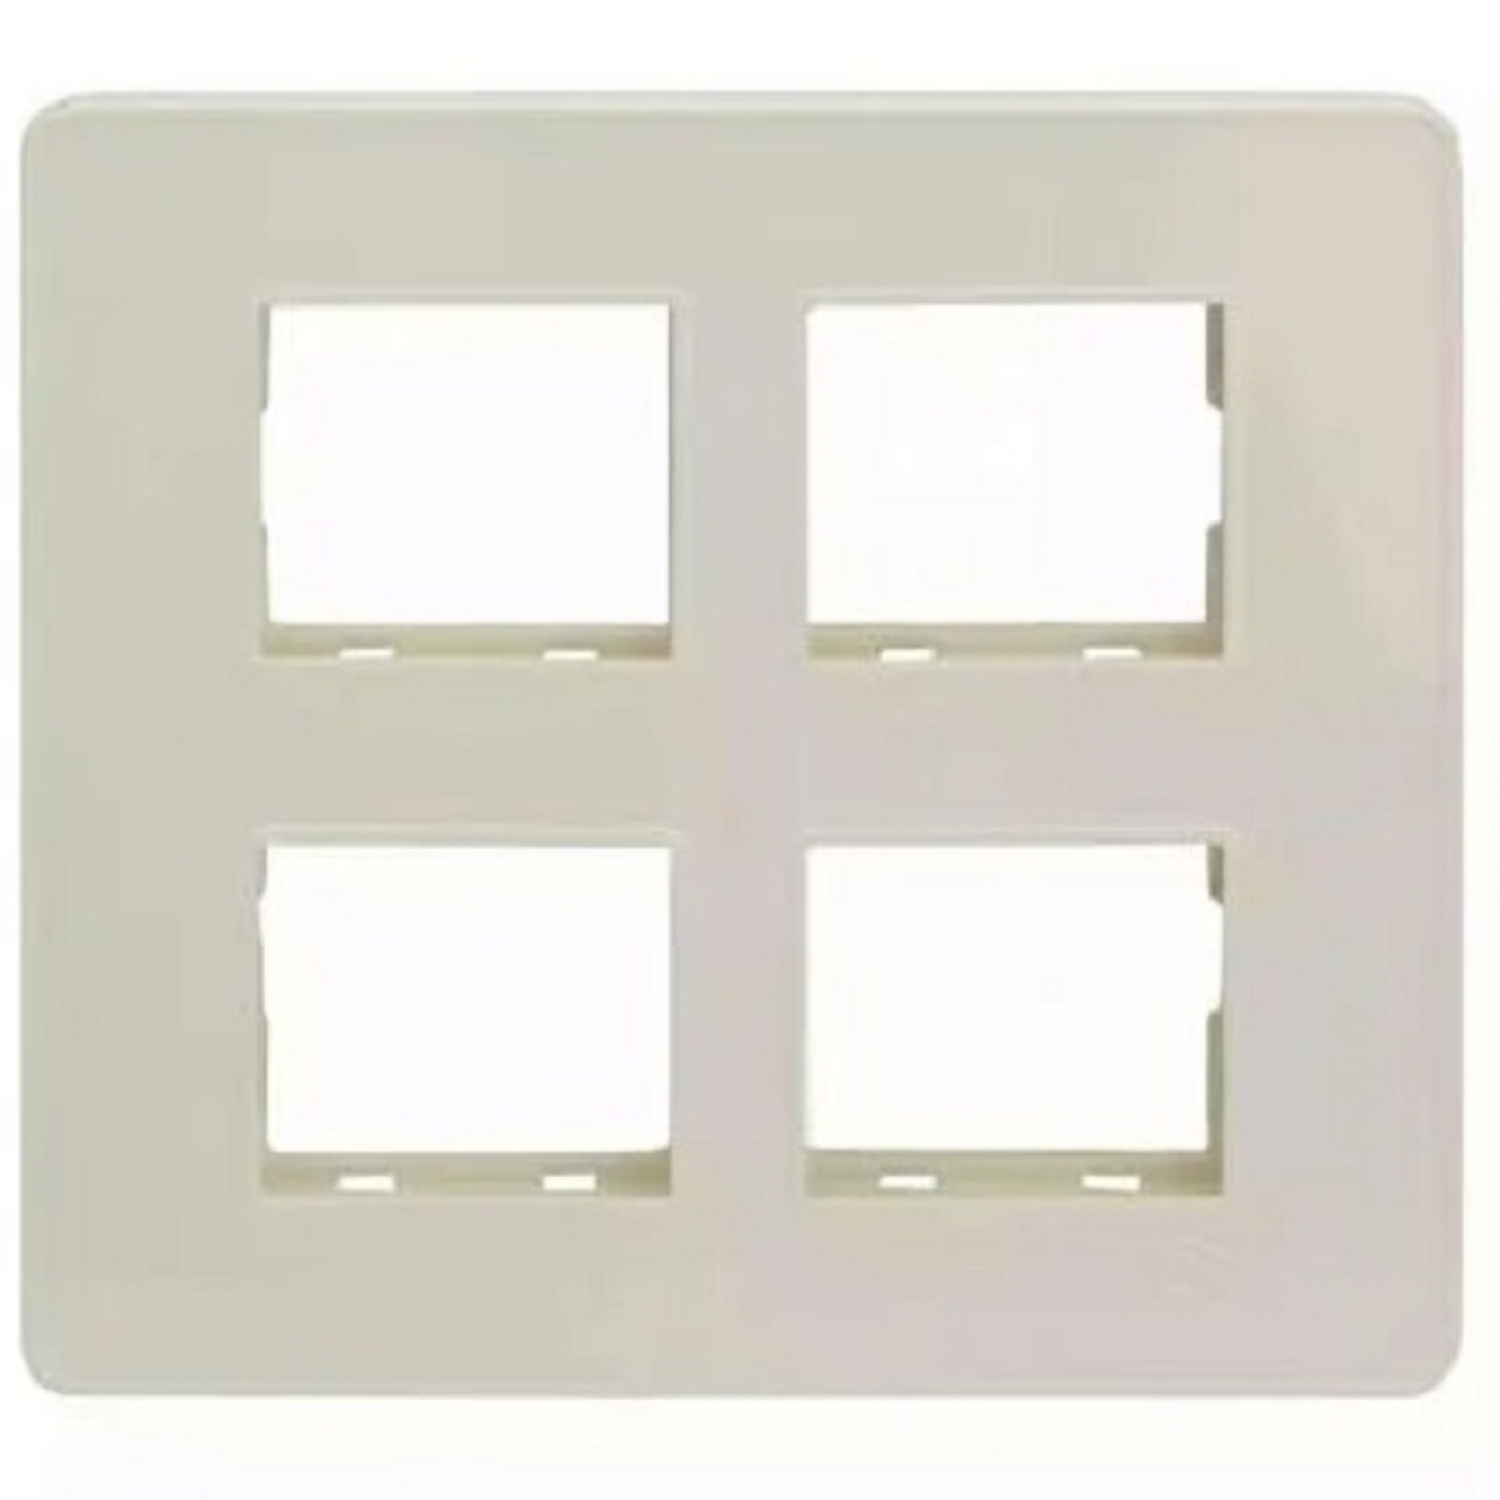  LT Engem  8 Module (Regular)  Square Cover Plate with Base Frame- White